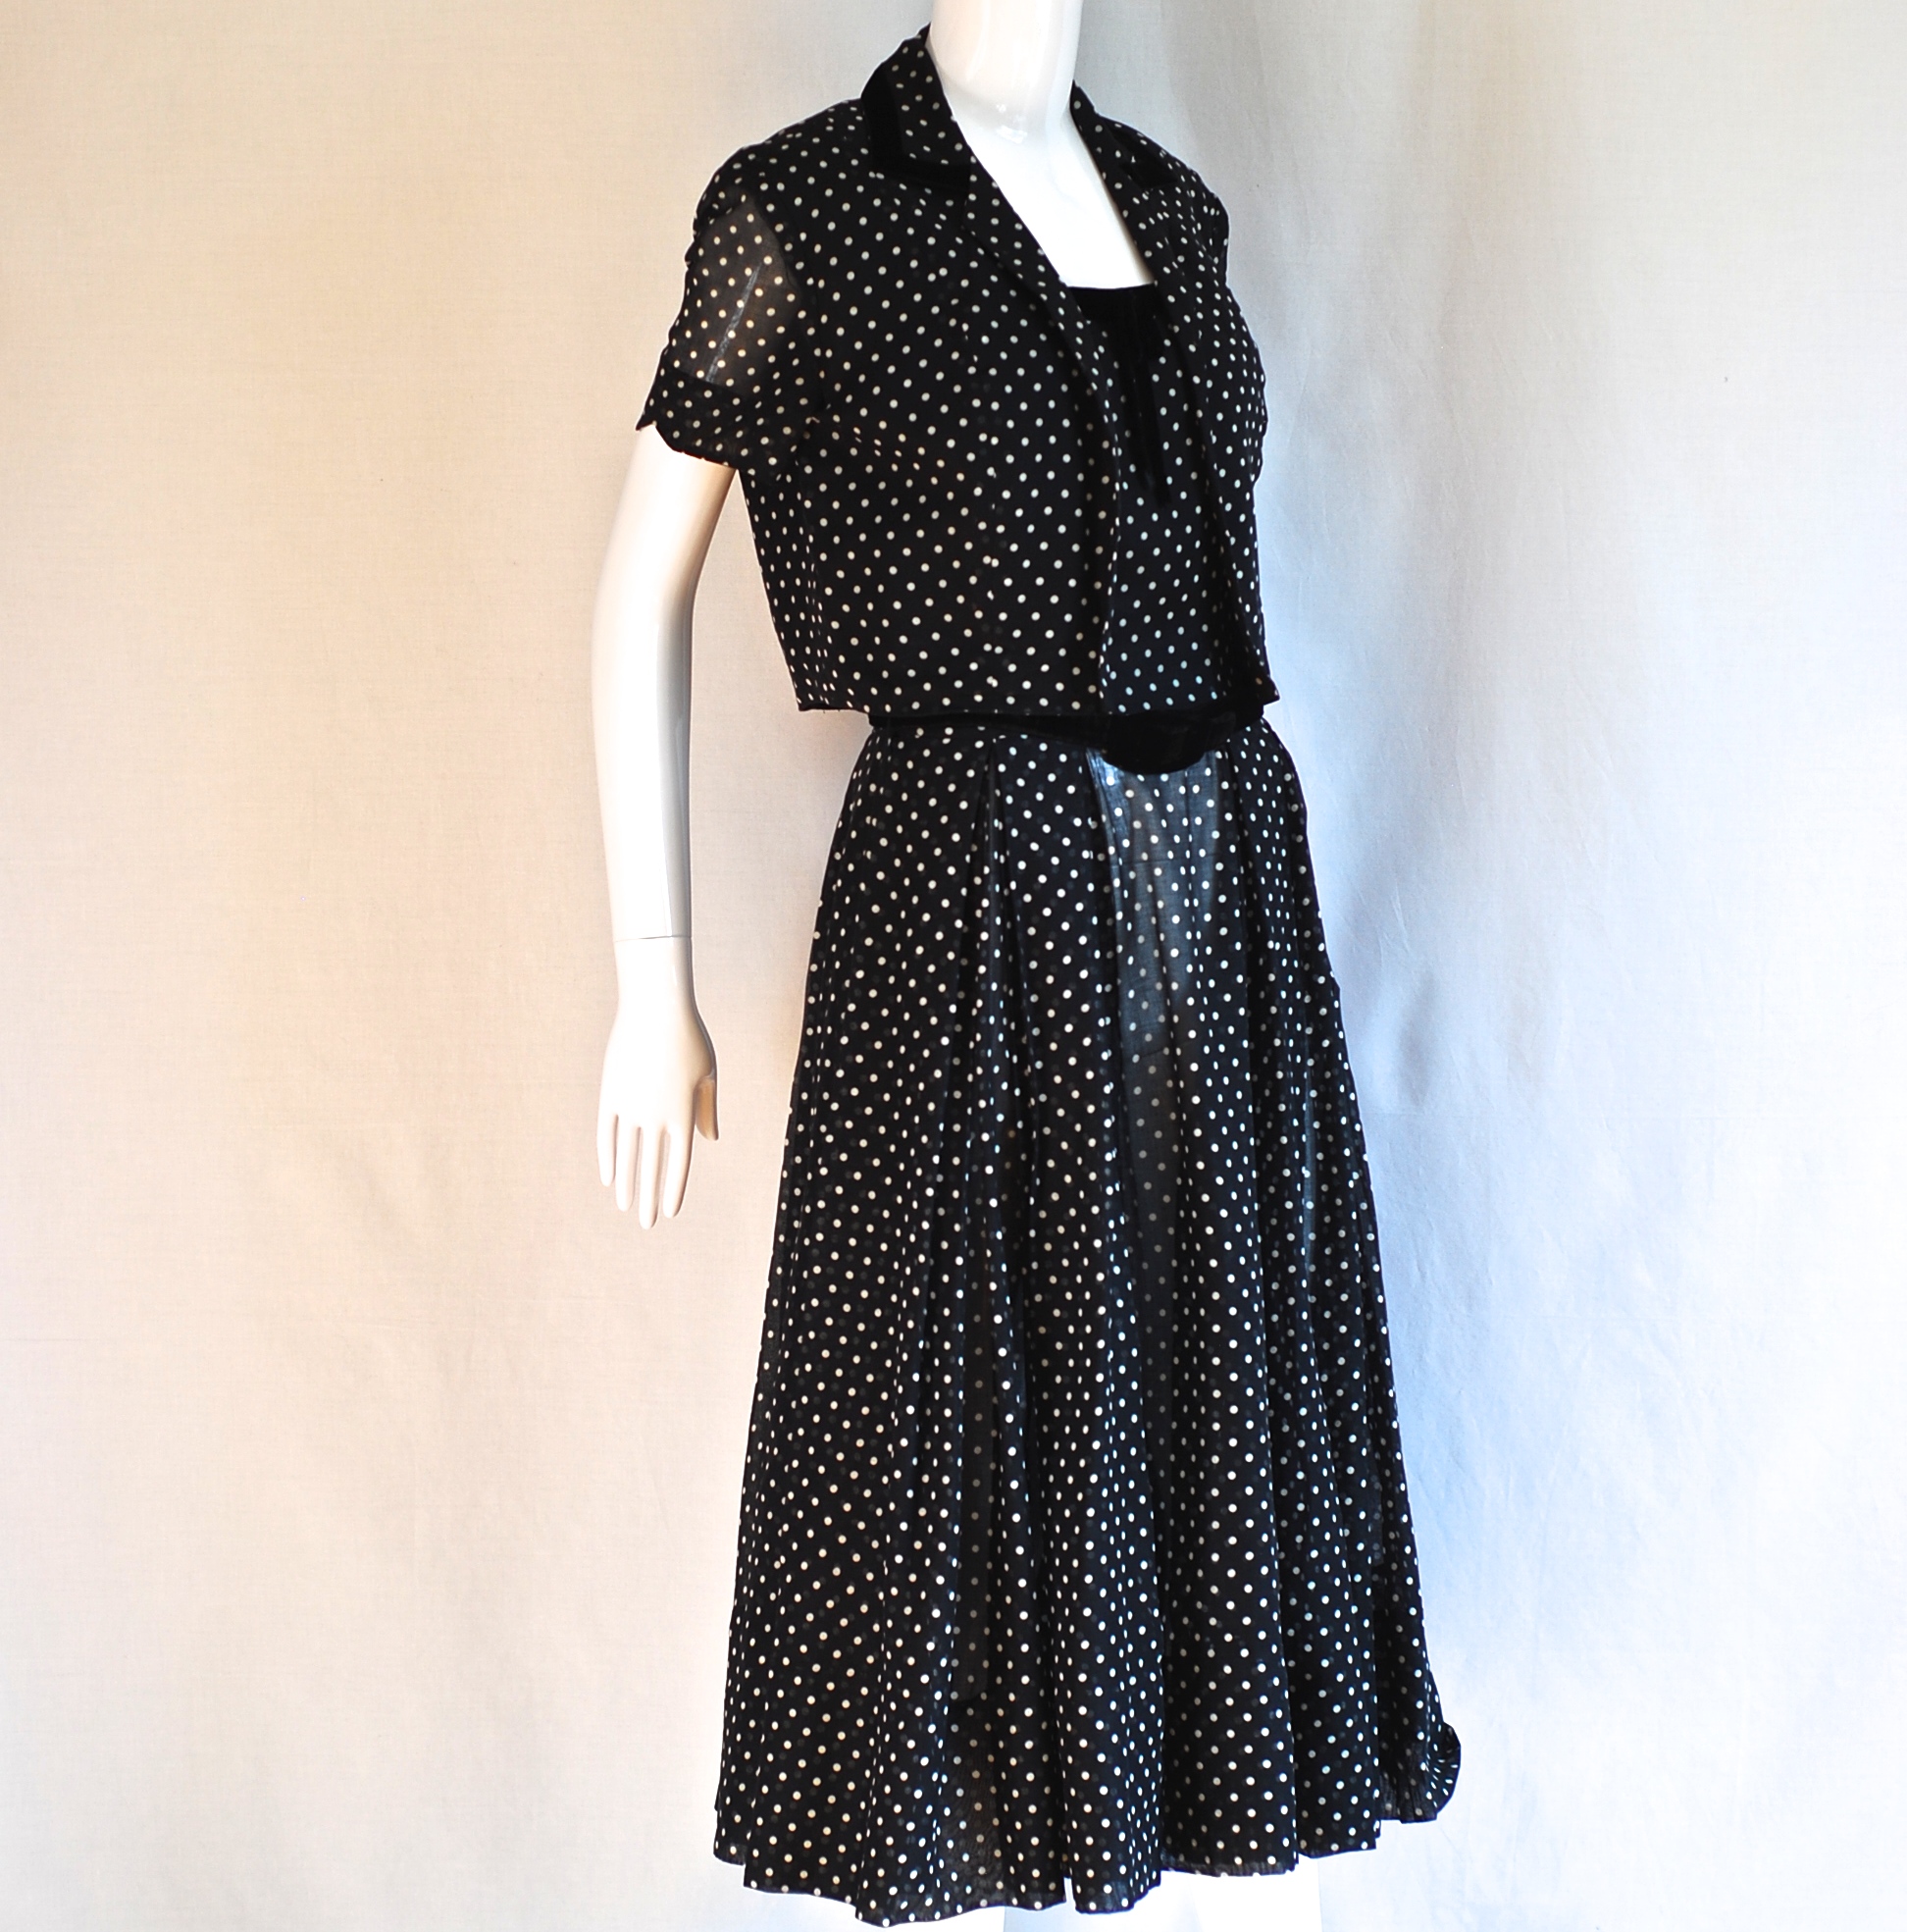 An Original by Lorayne 1940’s Black & White Dot Dress & Jacket | QUIET WEST